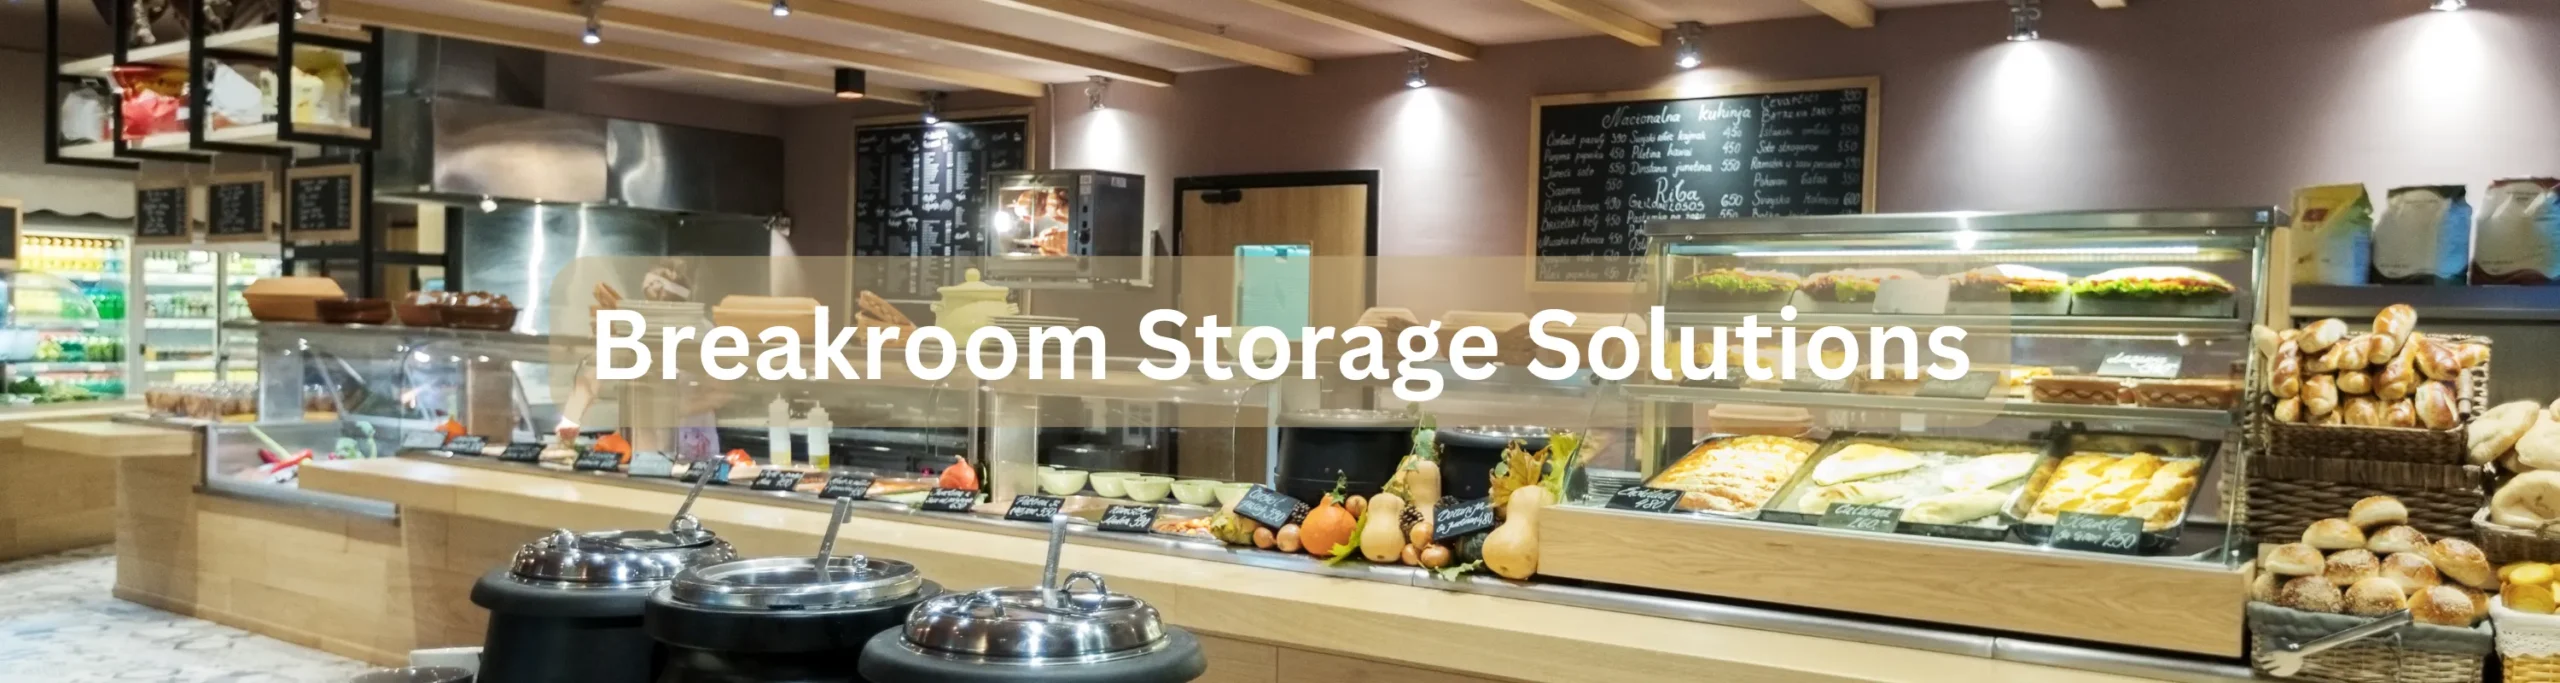 Breakroom Storage Solutions Banner